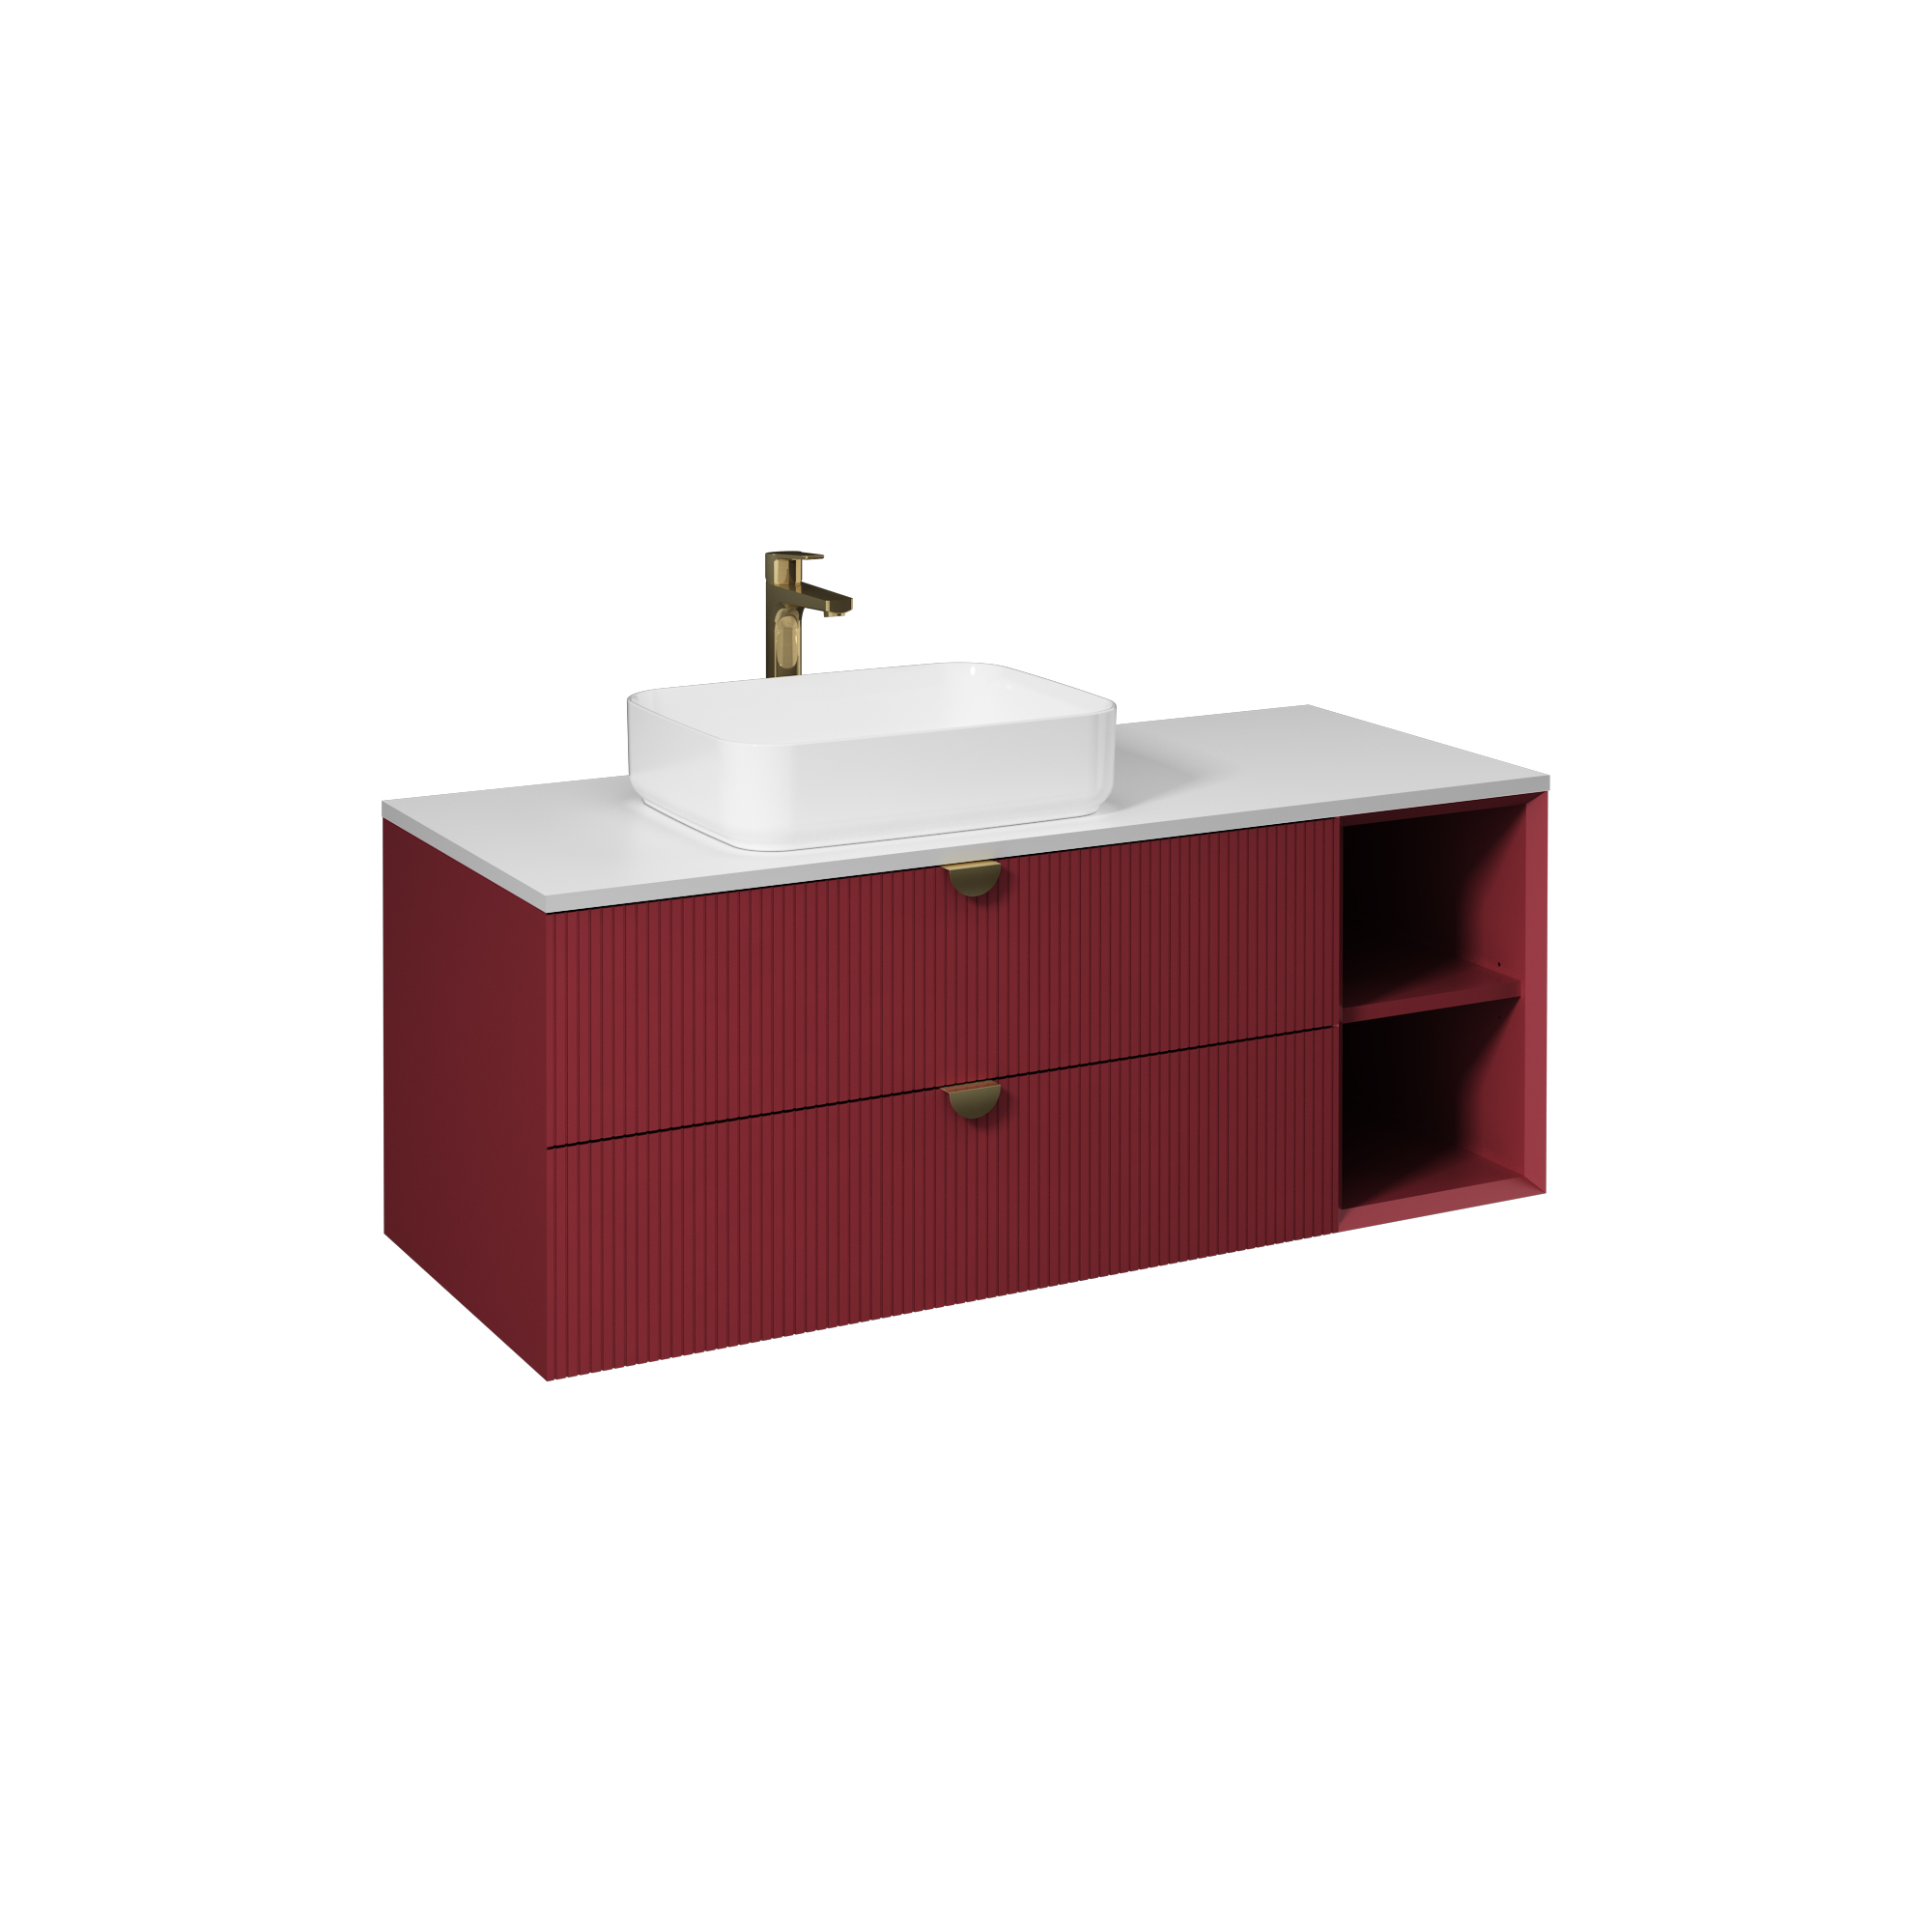 Infinity Washbasin Cabinet, Ruby Red, with White Washbasin 51"